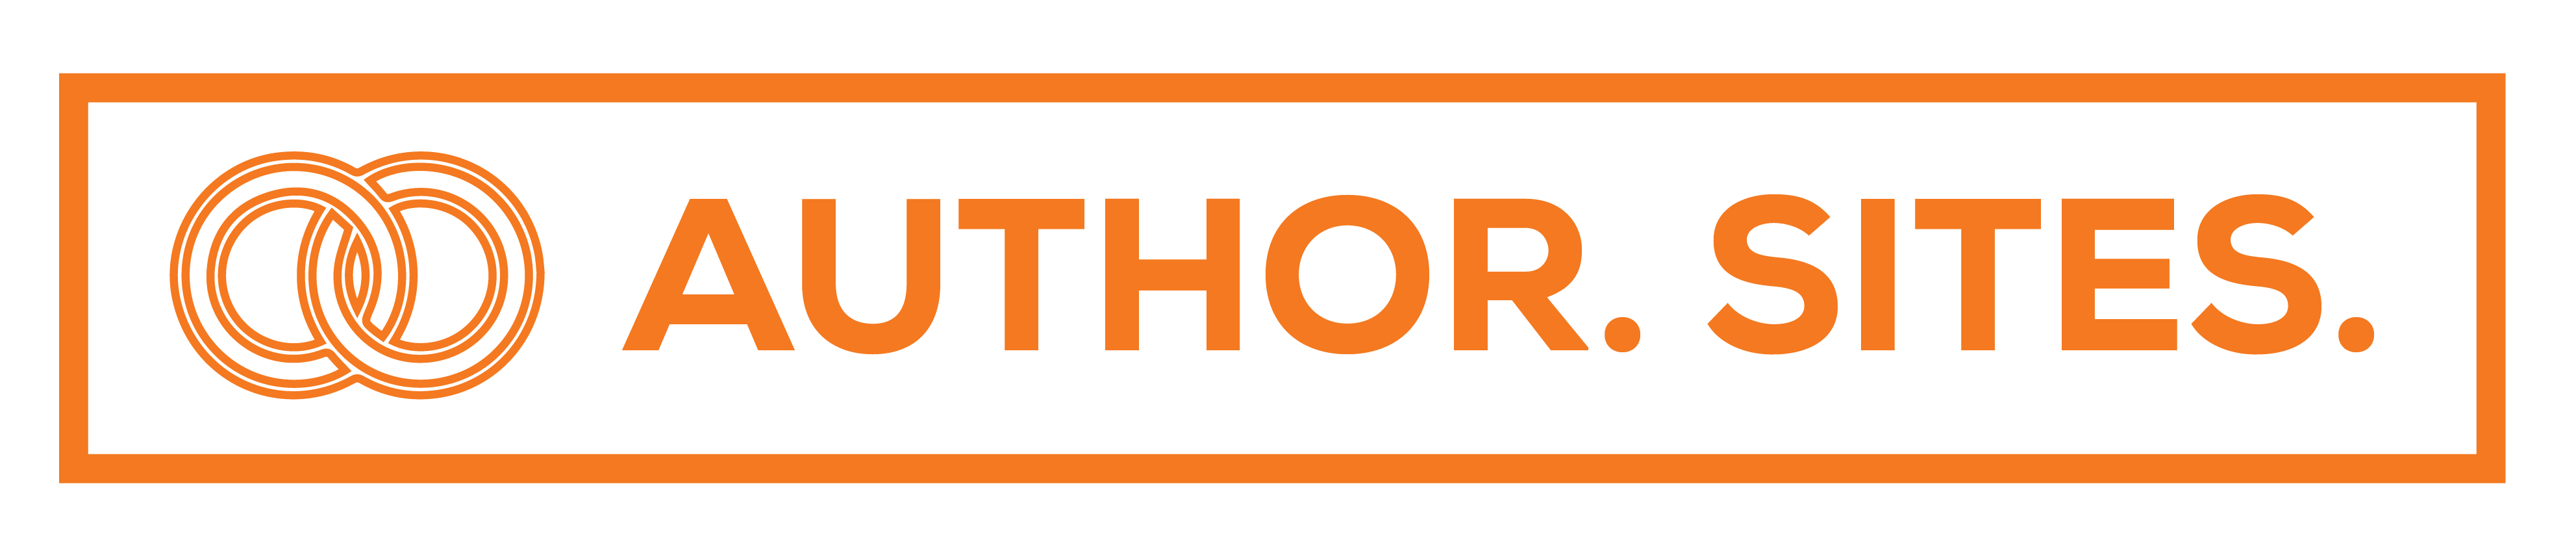 Author Sites Logo